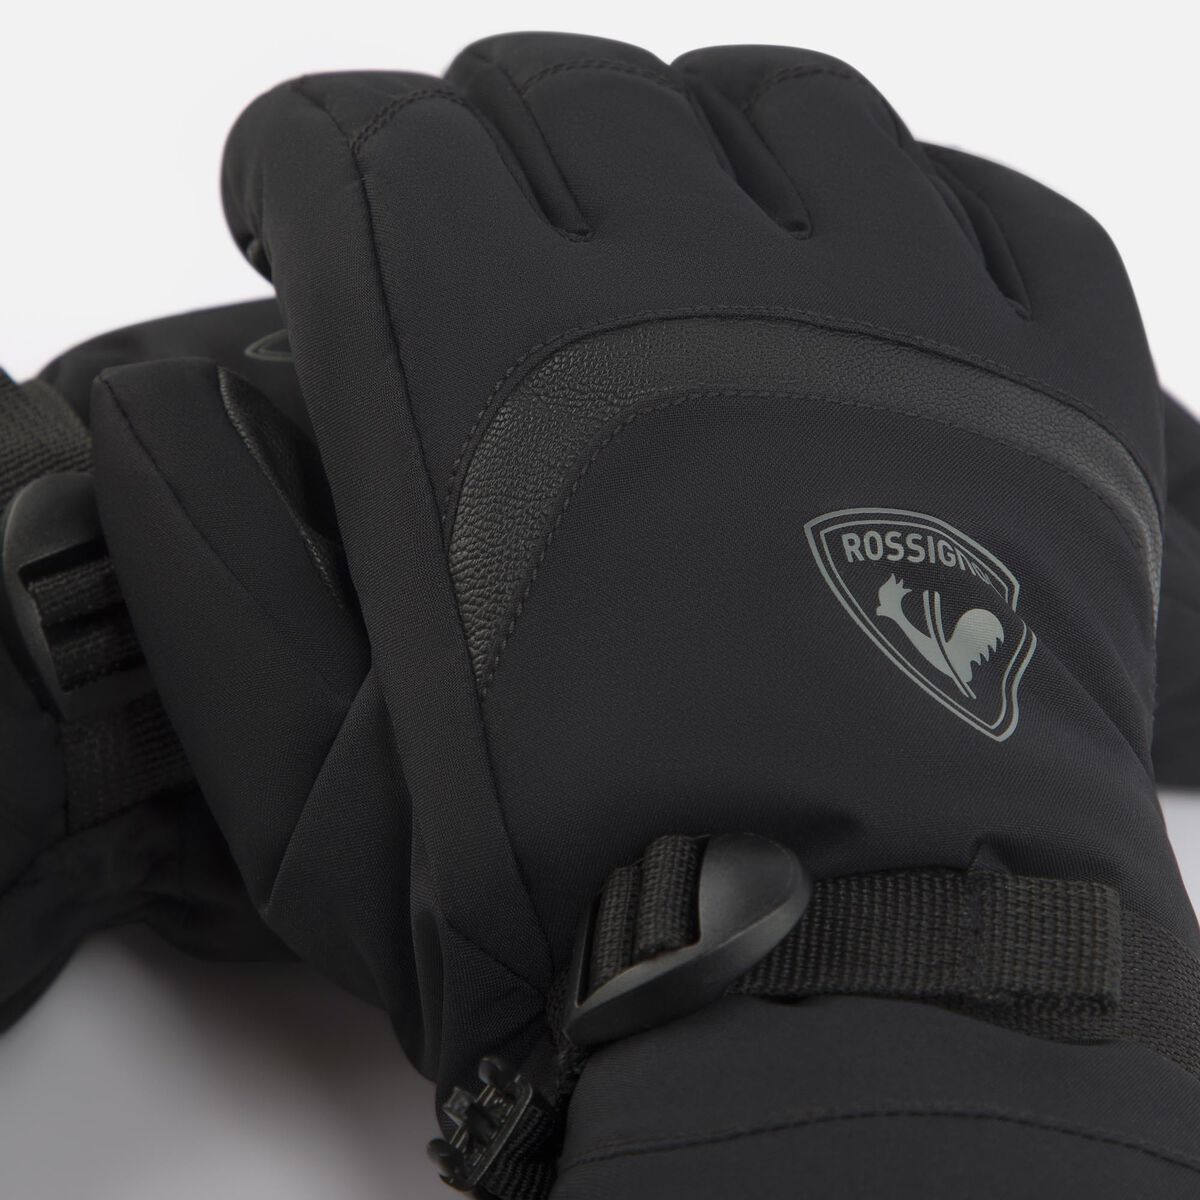 Rossignol Men's Type Ski Gloves Black